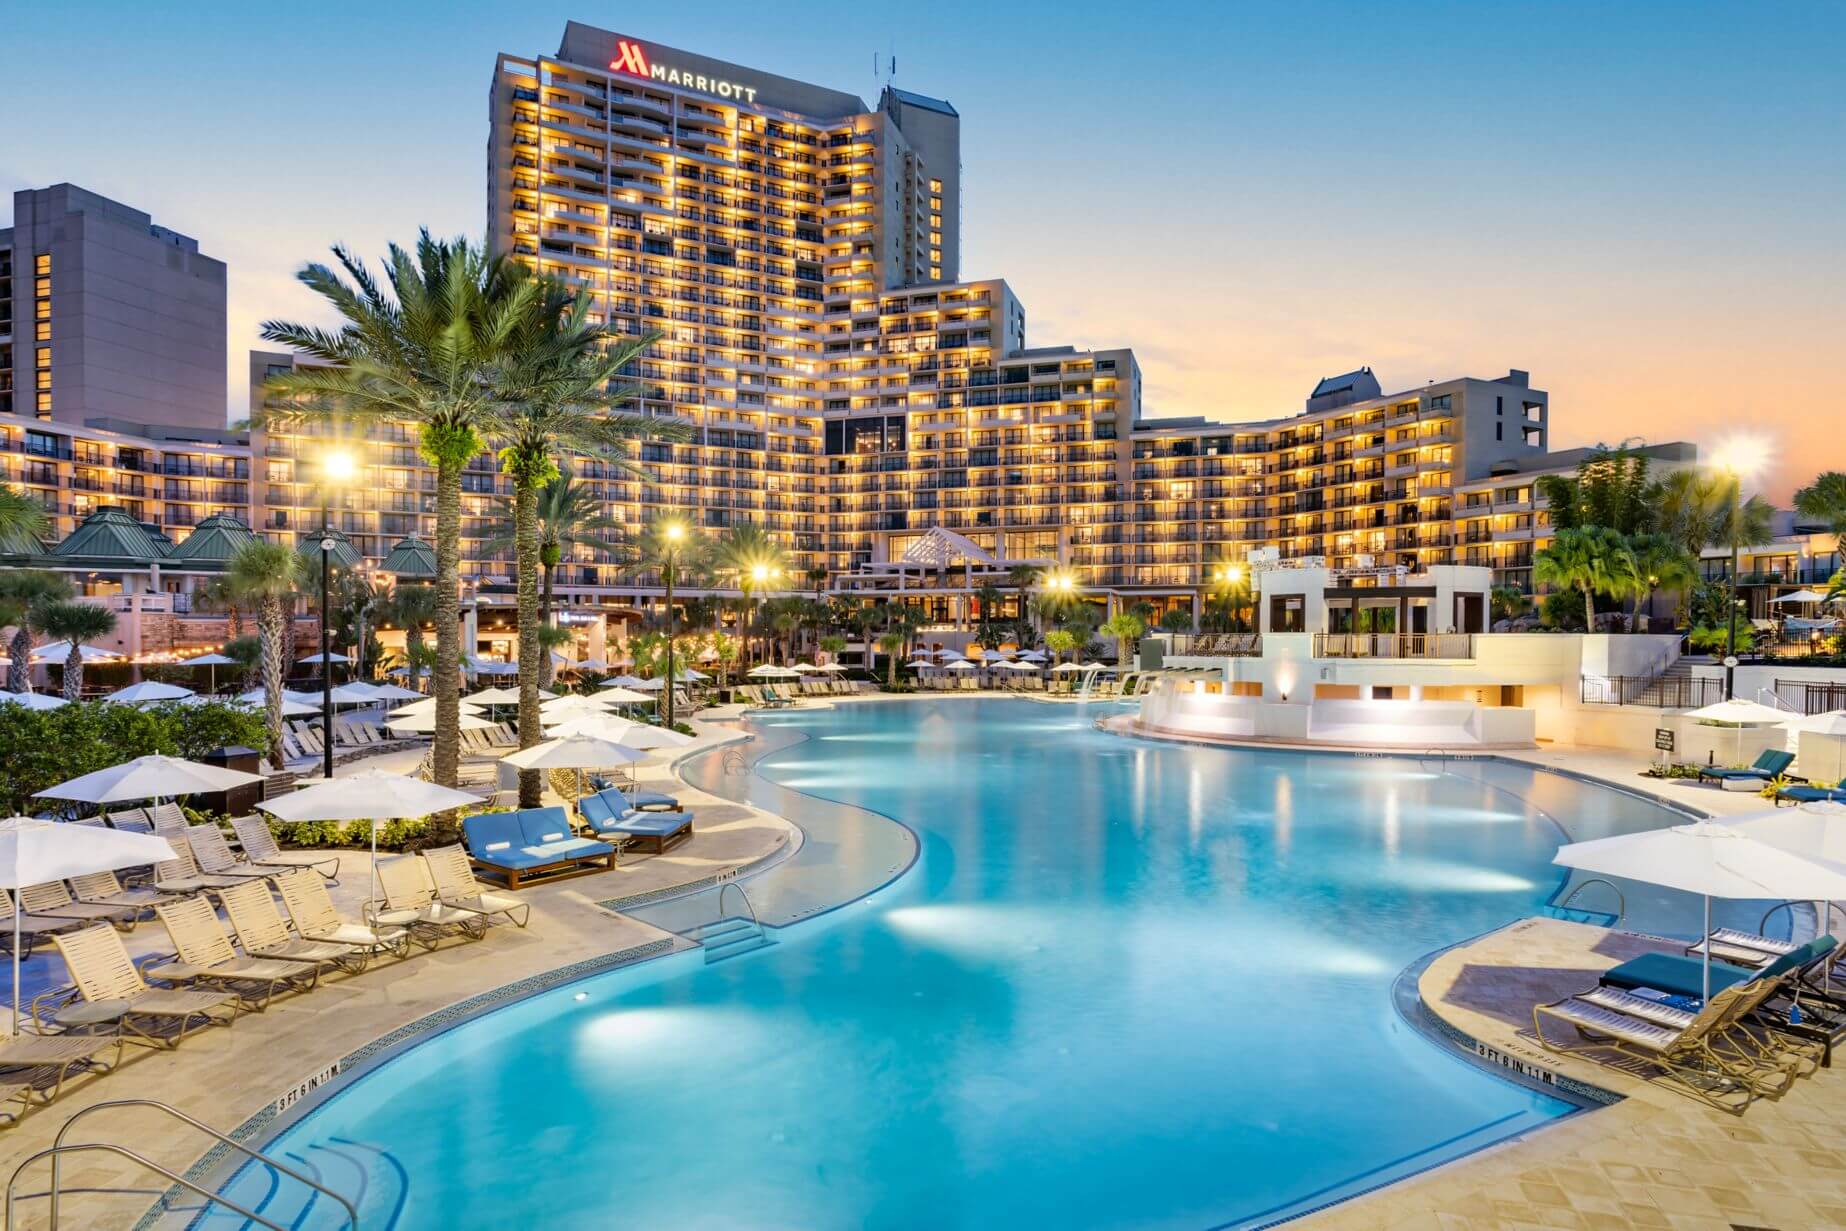 Orlando World Center Marriott Falls Oasis Poolside view of hotel